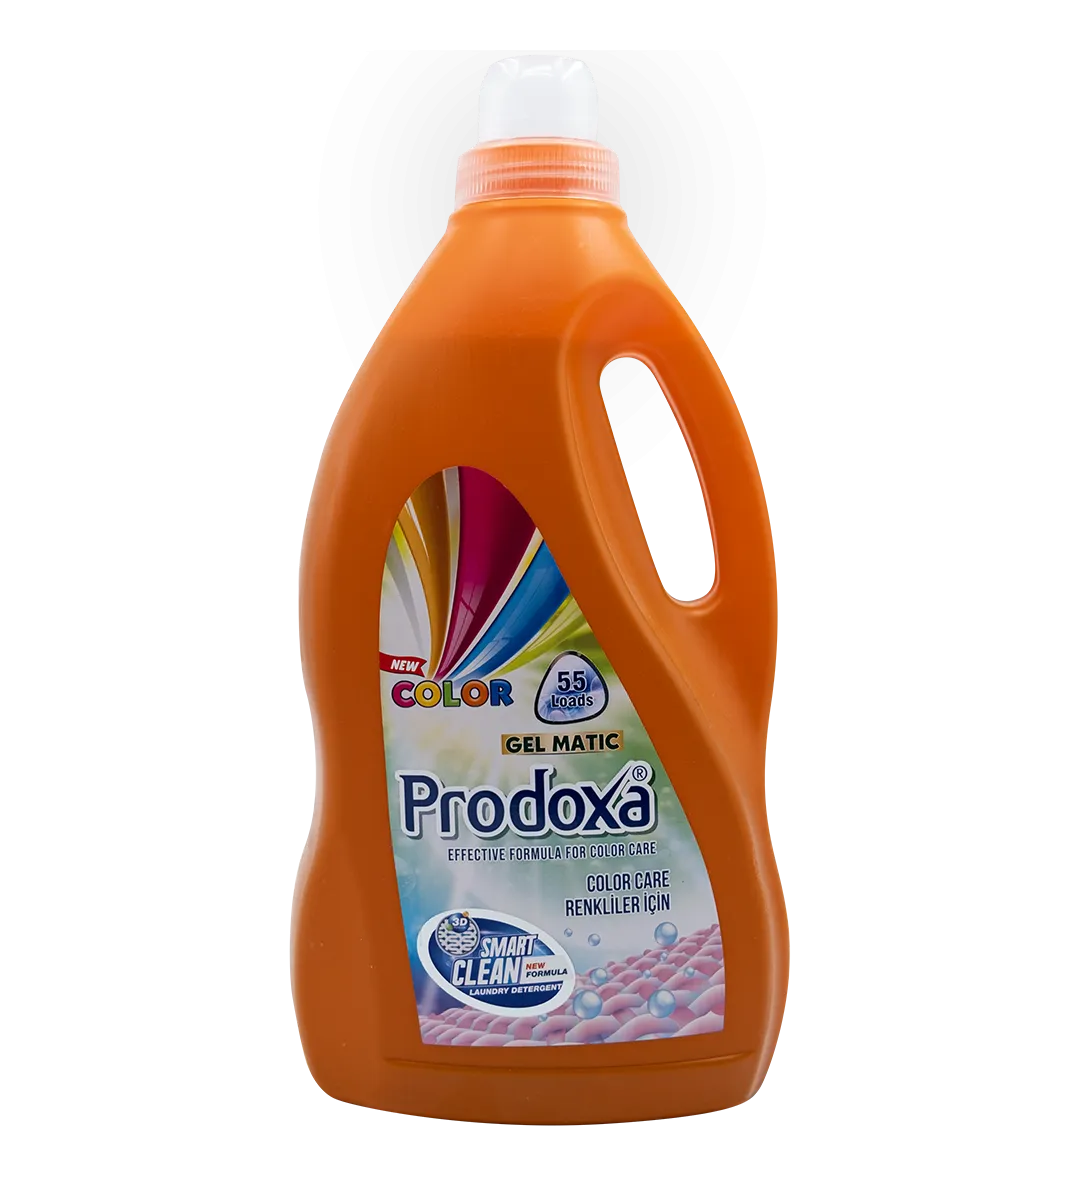 Prodoxa 3 Lt Laundry Detergent For Colors